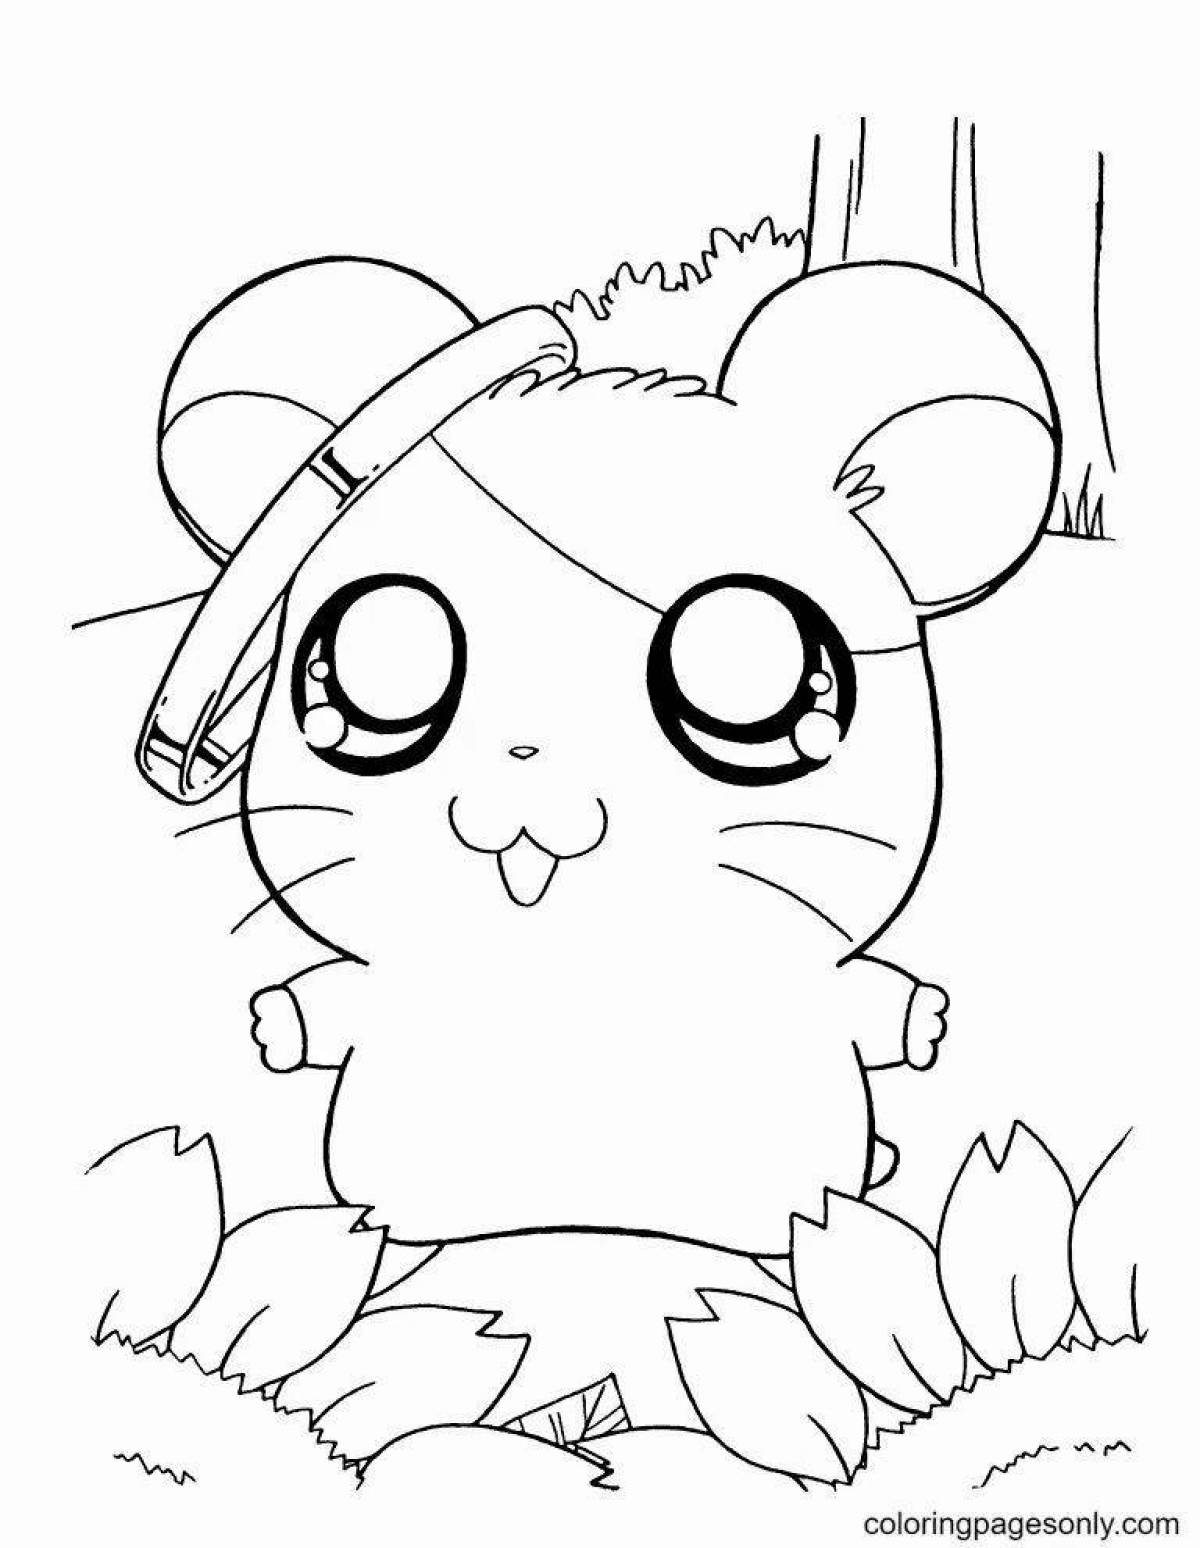 Fancy coloring hamster